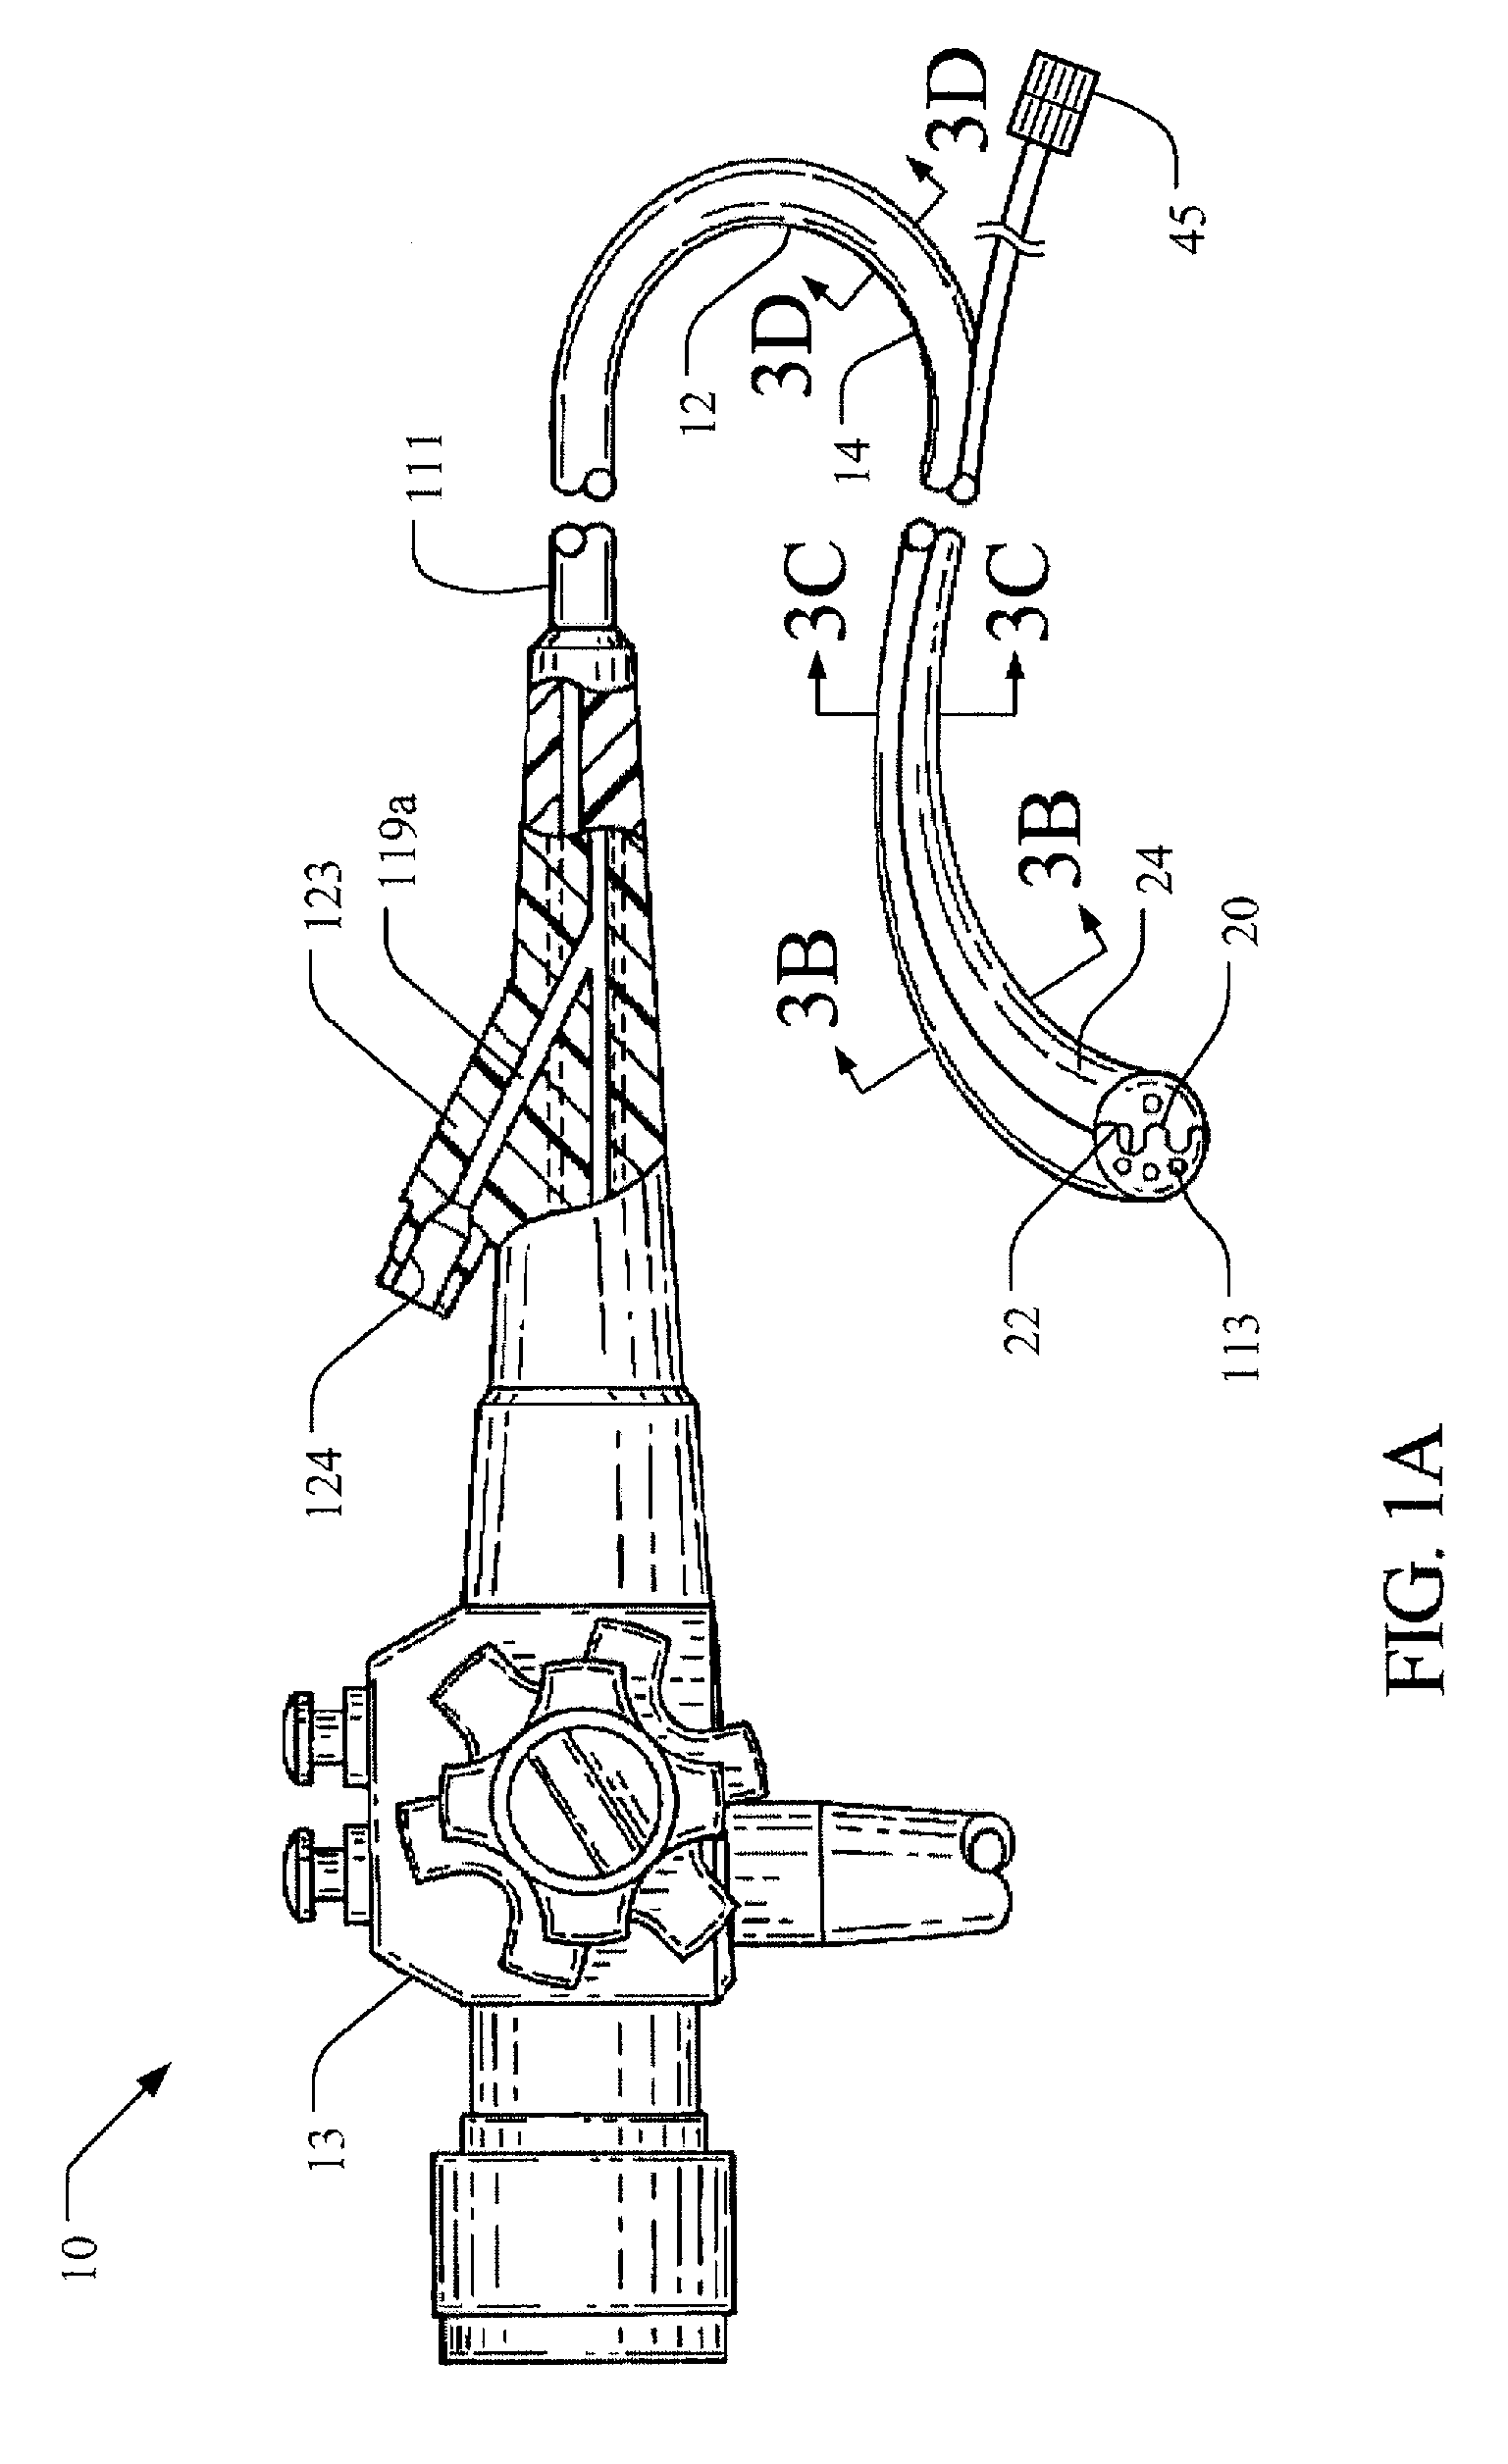 Endoscopic apparatus having an outer rail